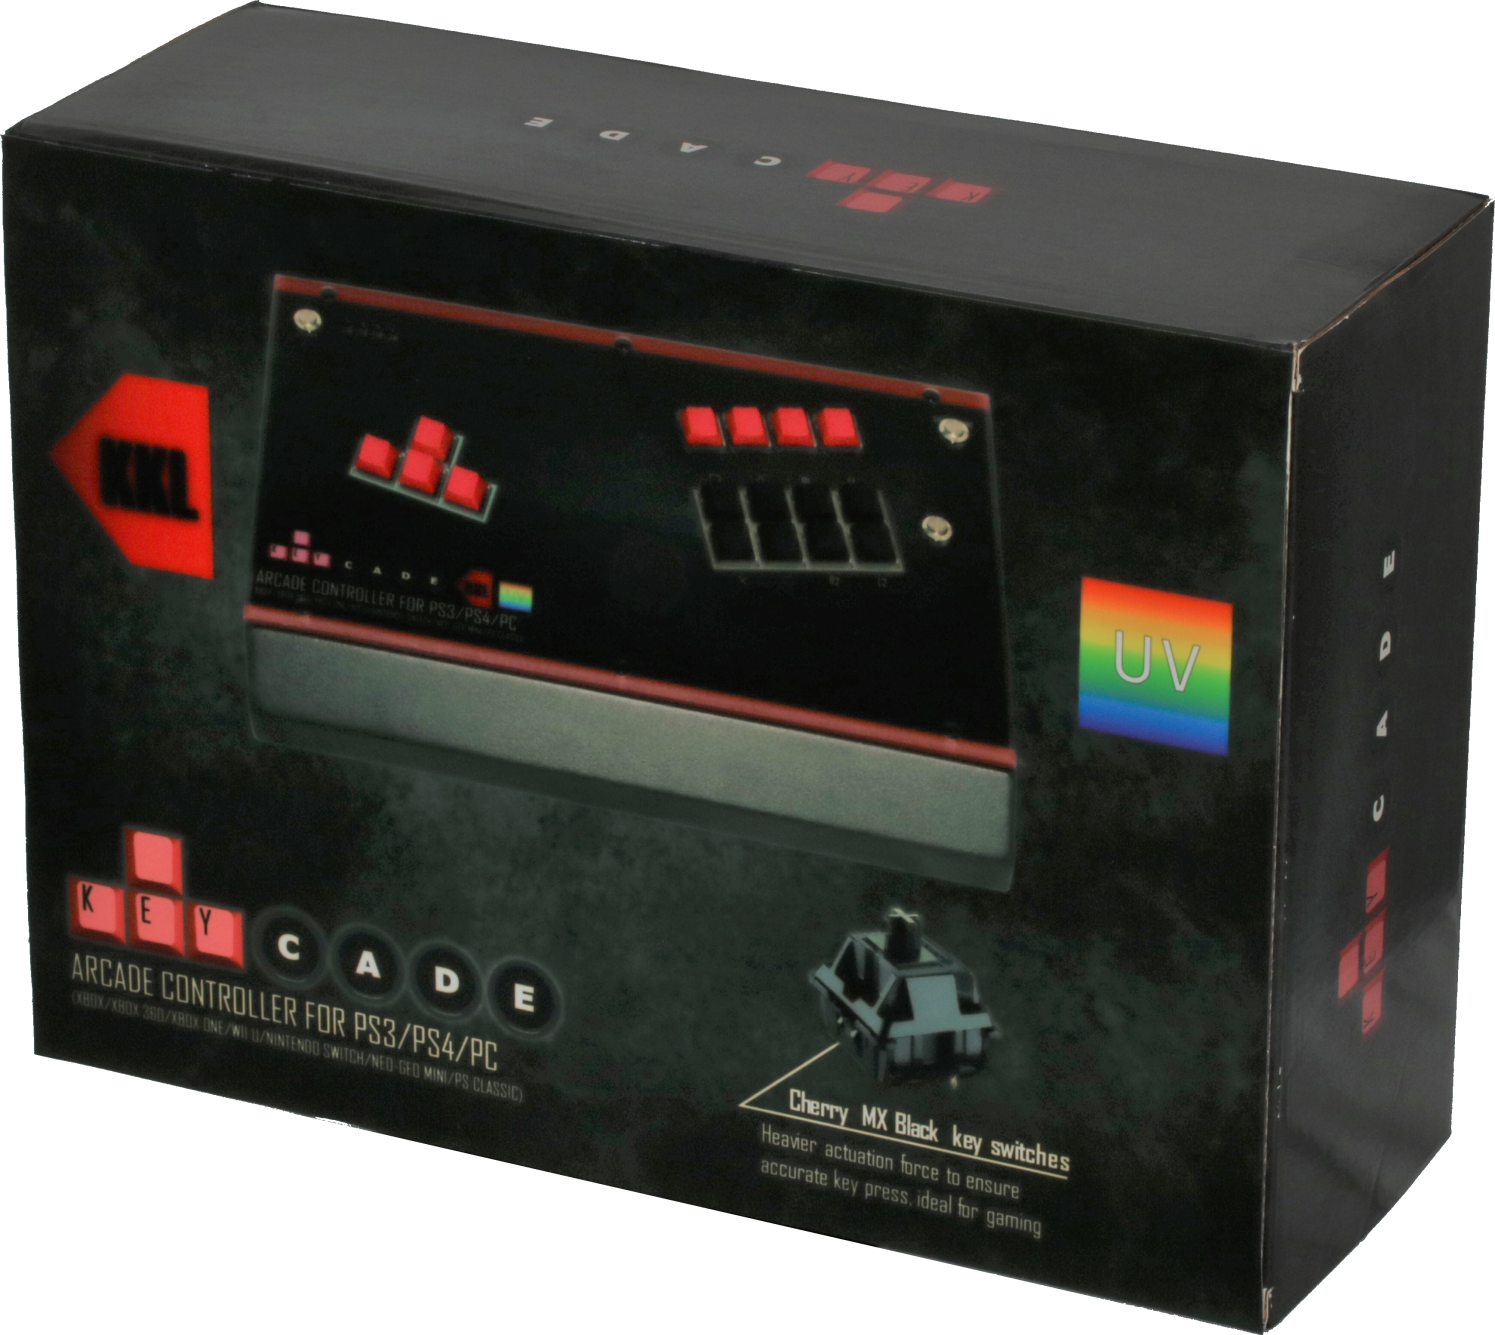 KeyCade KKL UV arcade controller